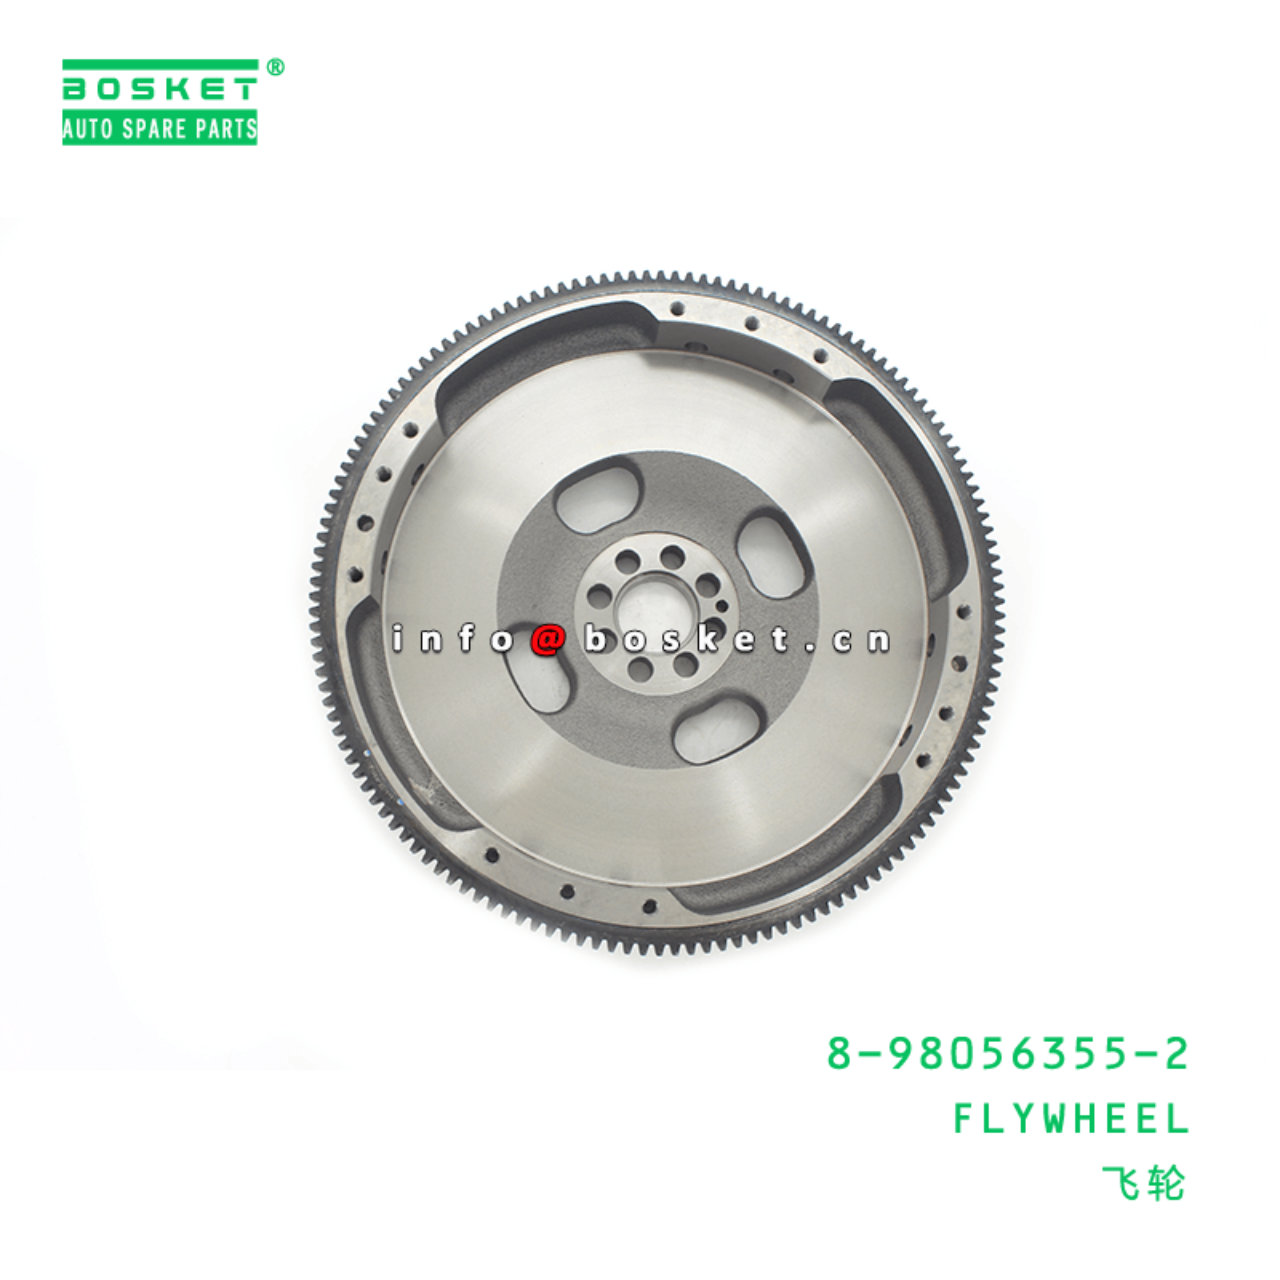 8-98056355-2 Flywheel 8980563552 Suitable for ISUZU 700P - For 